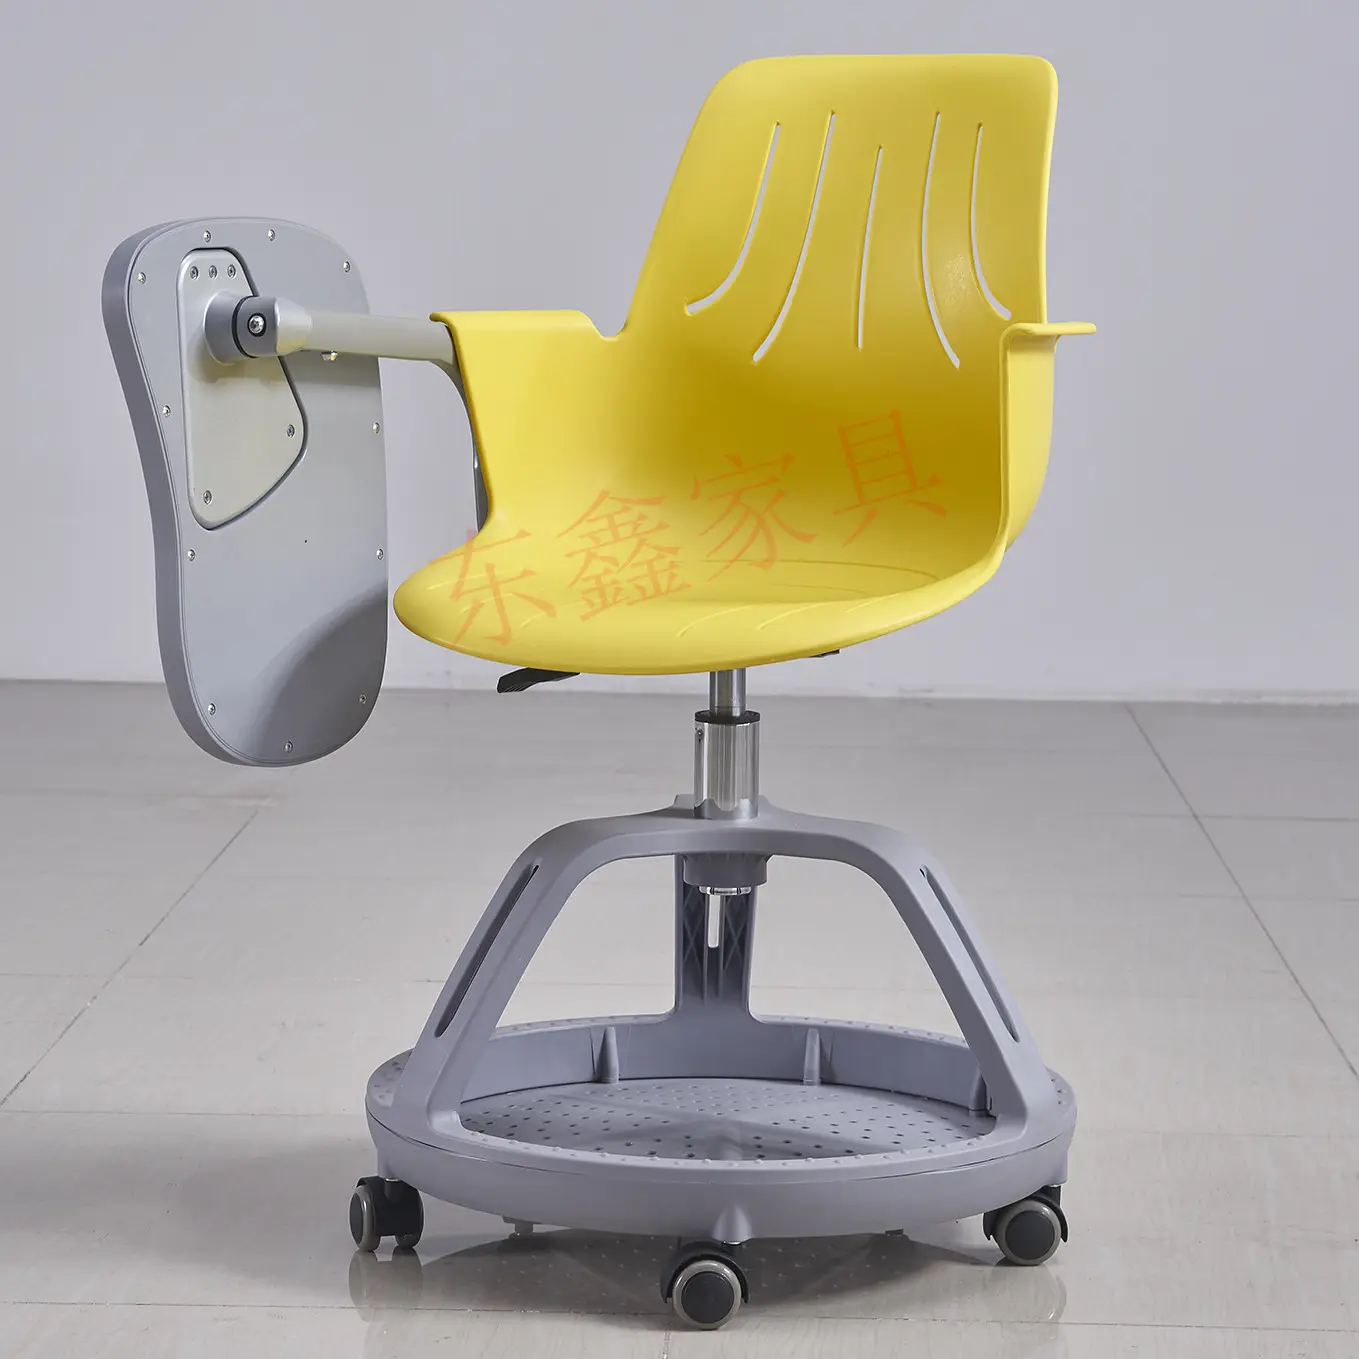 2021 Most Popular Node Chair Desk School Furniture DX01+03R